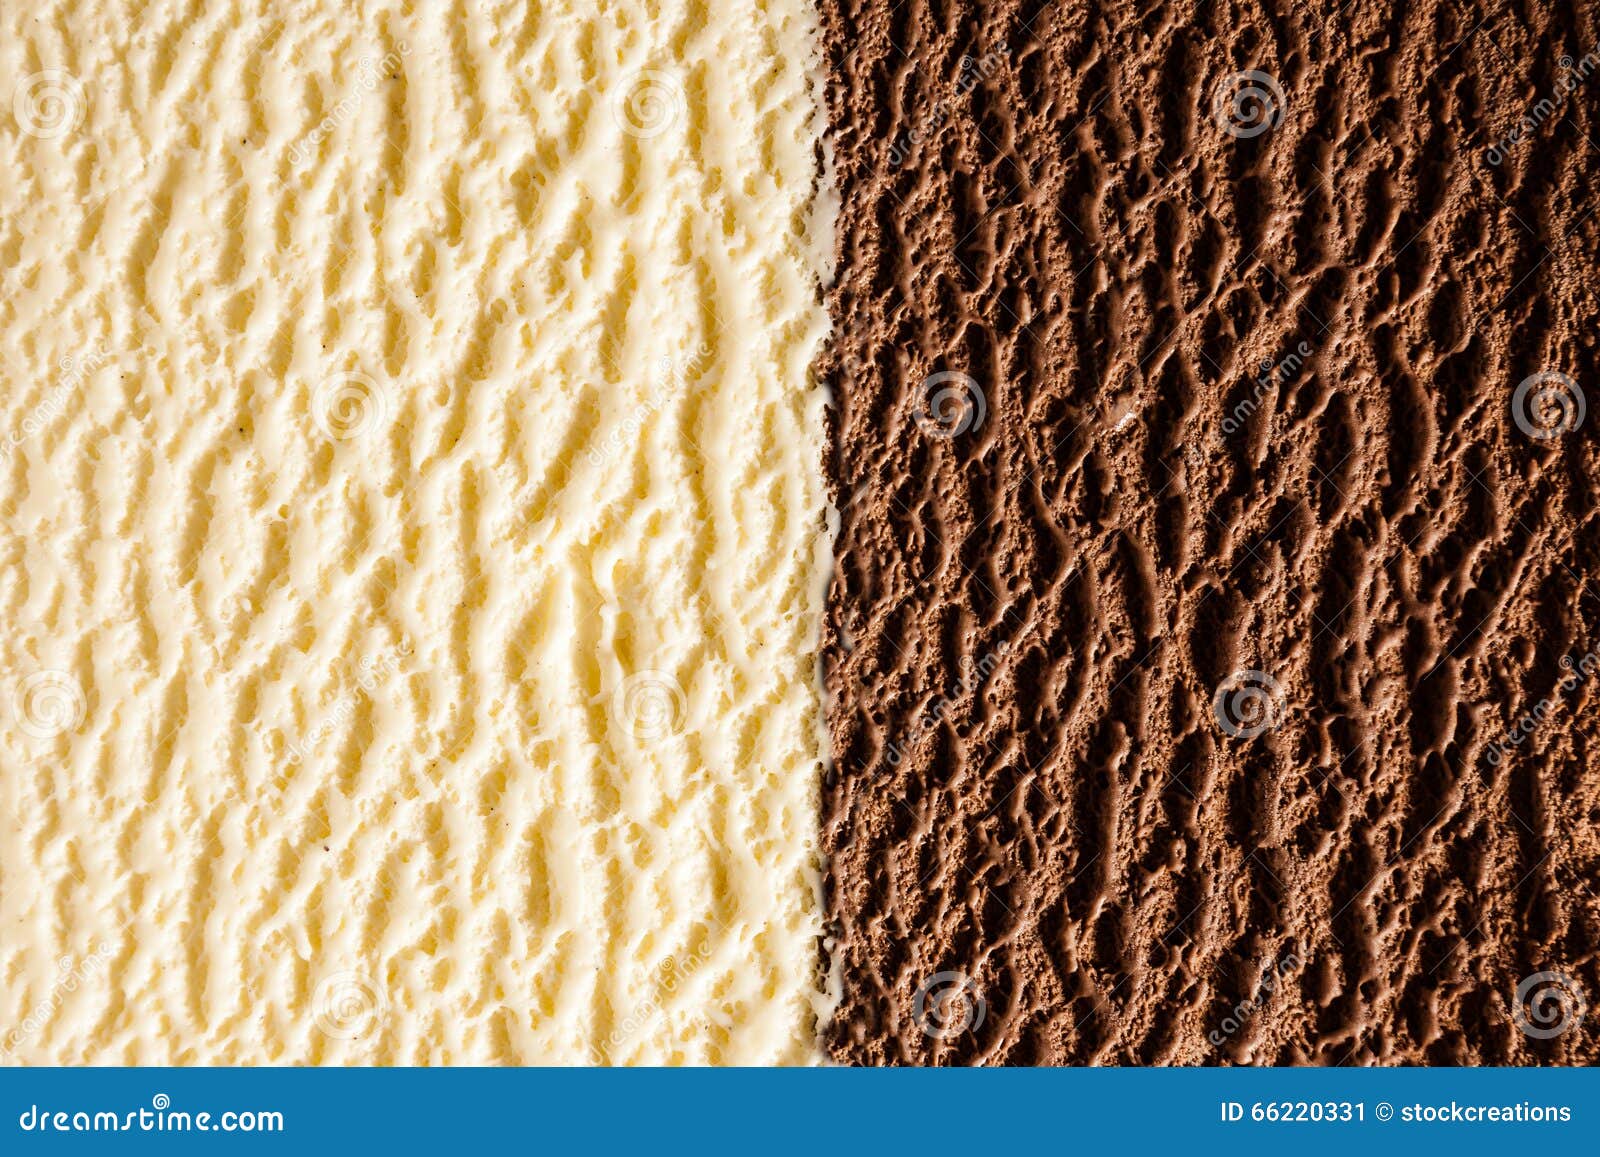 Chocolate And Vanilla Bourbon Ice Creams Stock Image Image Of Closeup Background